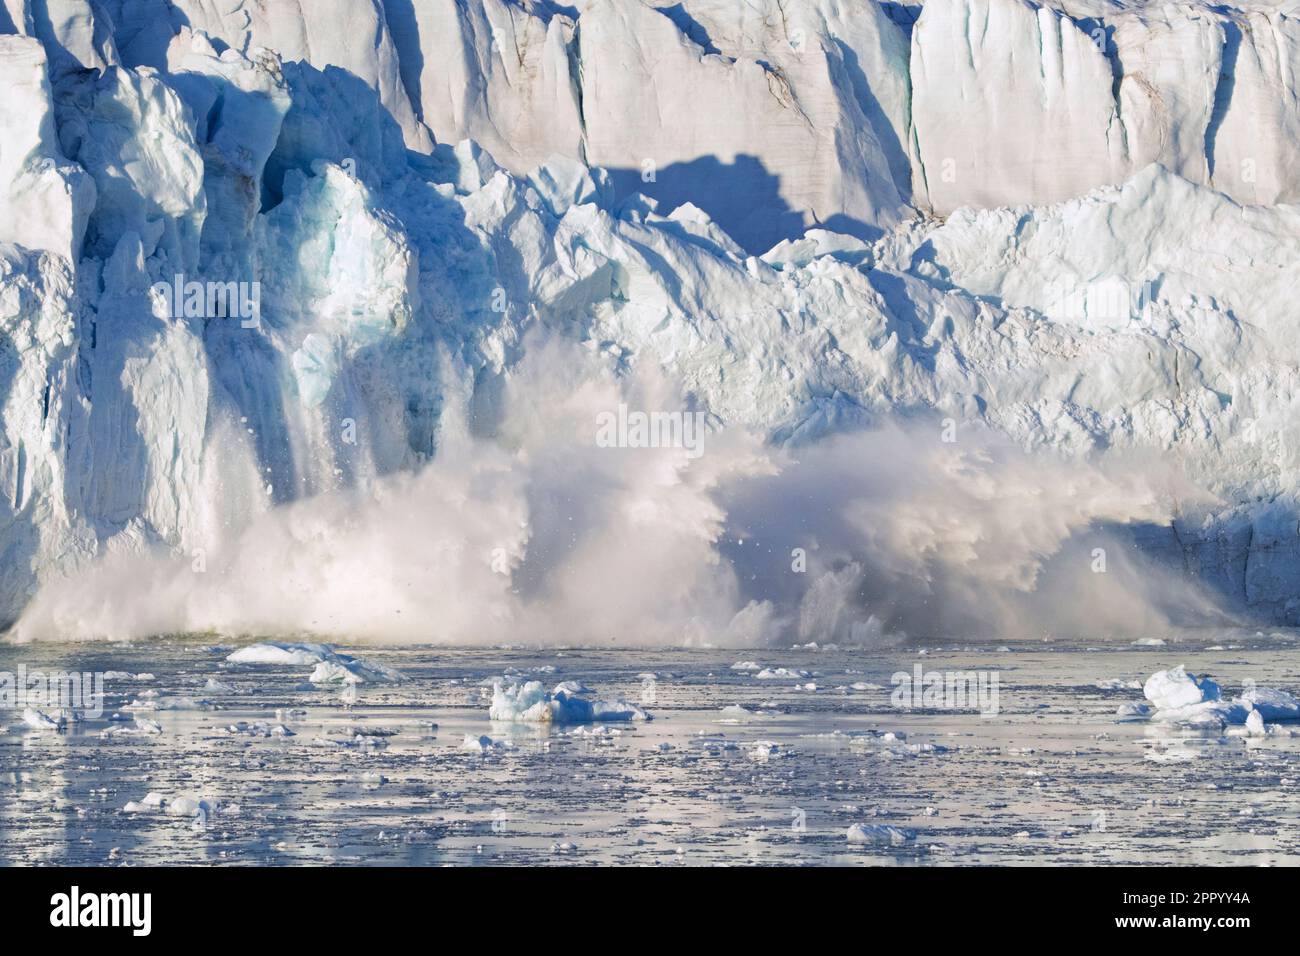 Enorme frammento di ghiaccio che si rompe dal bordo del ghiacciaio Lilliehöökbreen in Lilliehöök Fjord / Lilliehöökfjorden, Albert i Land, Spitsbergen / Svalbard Foto Stock